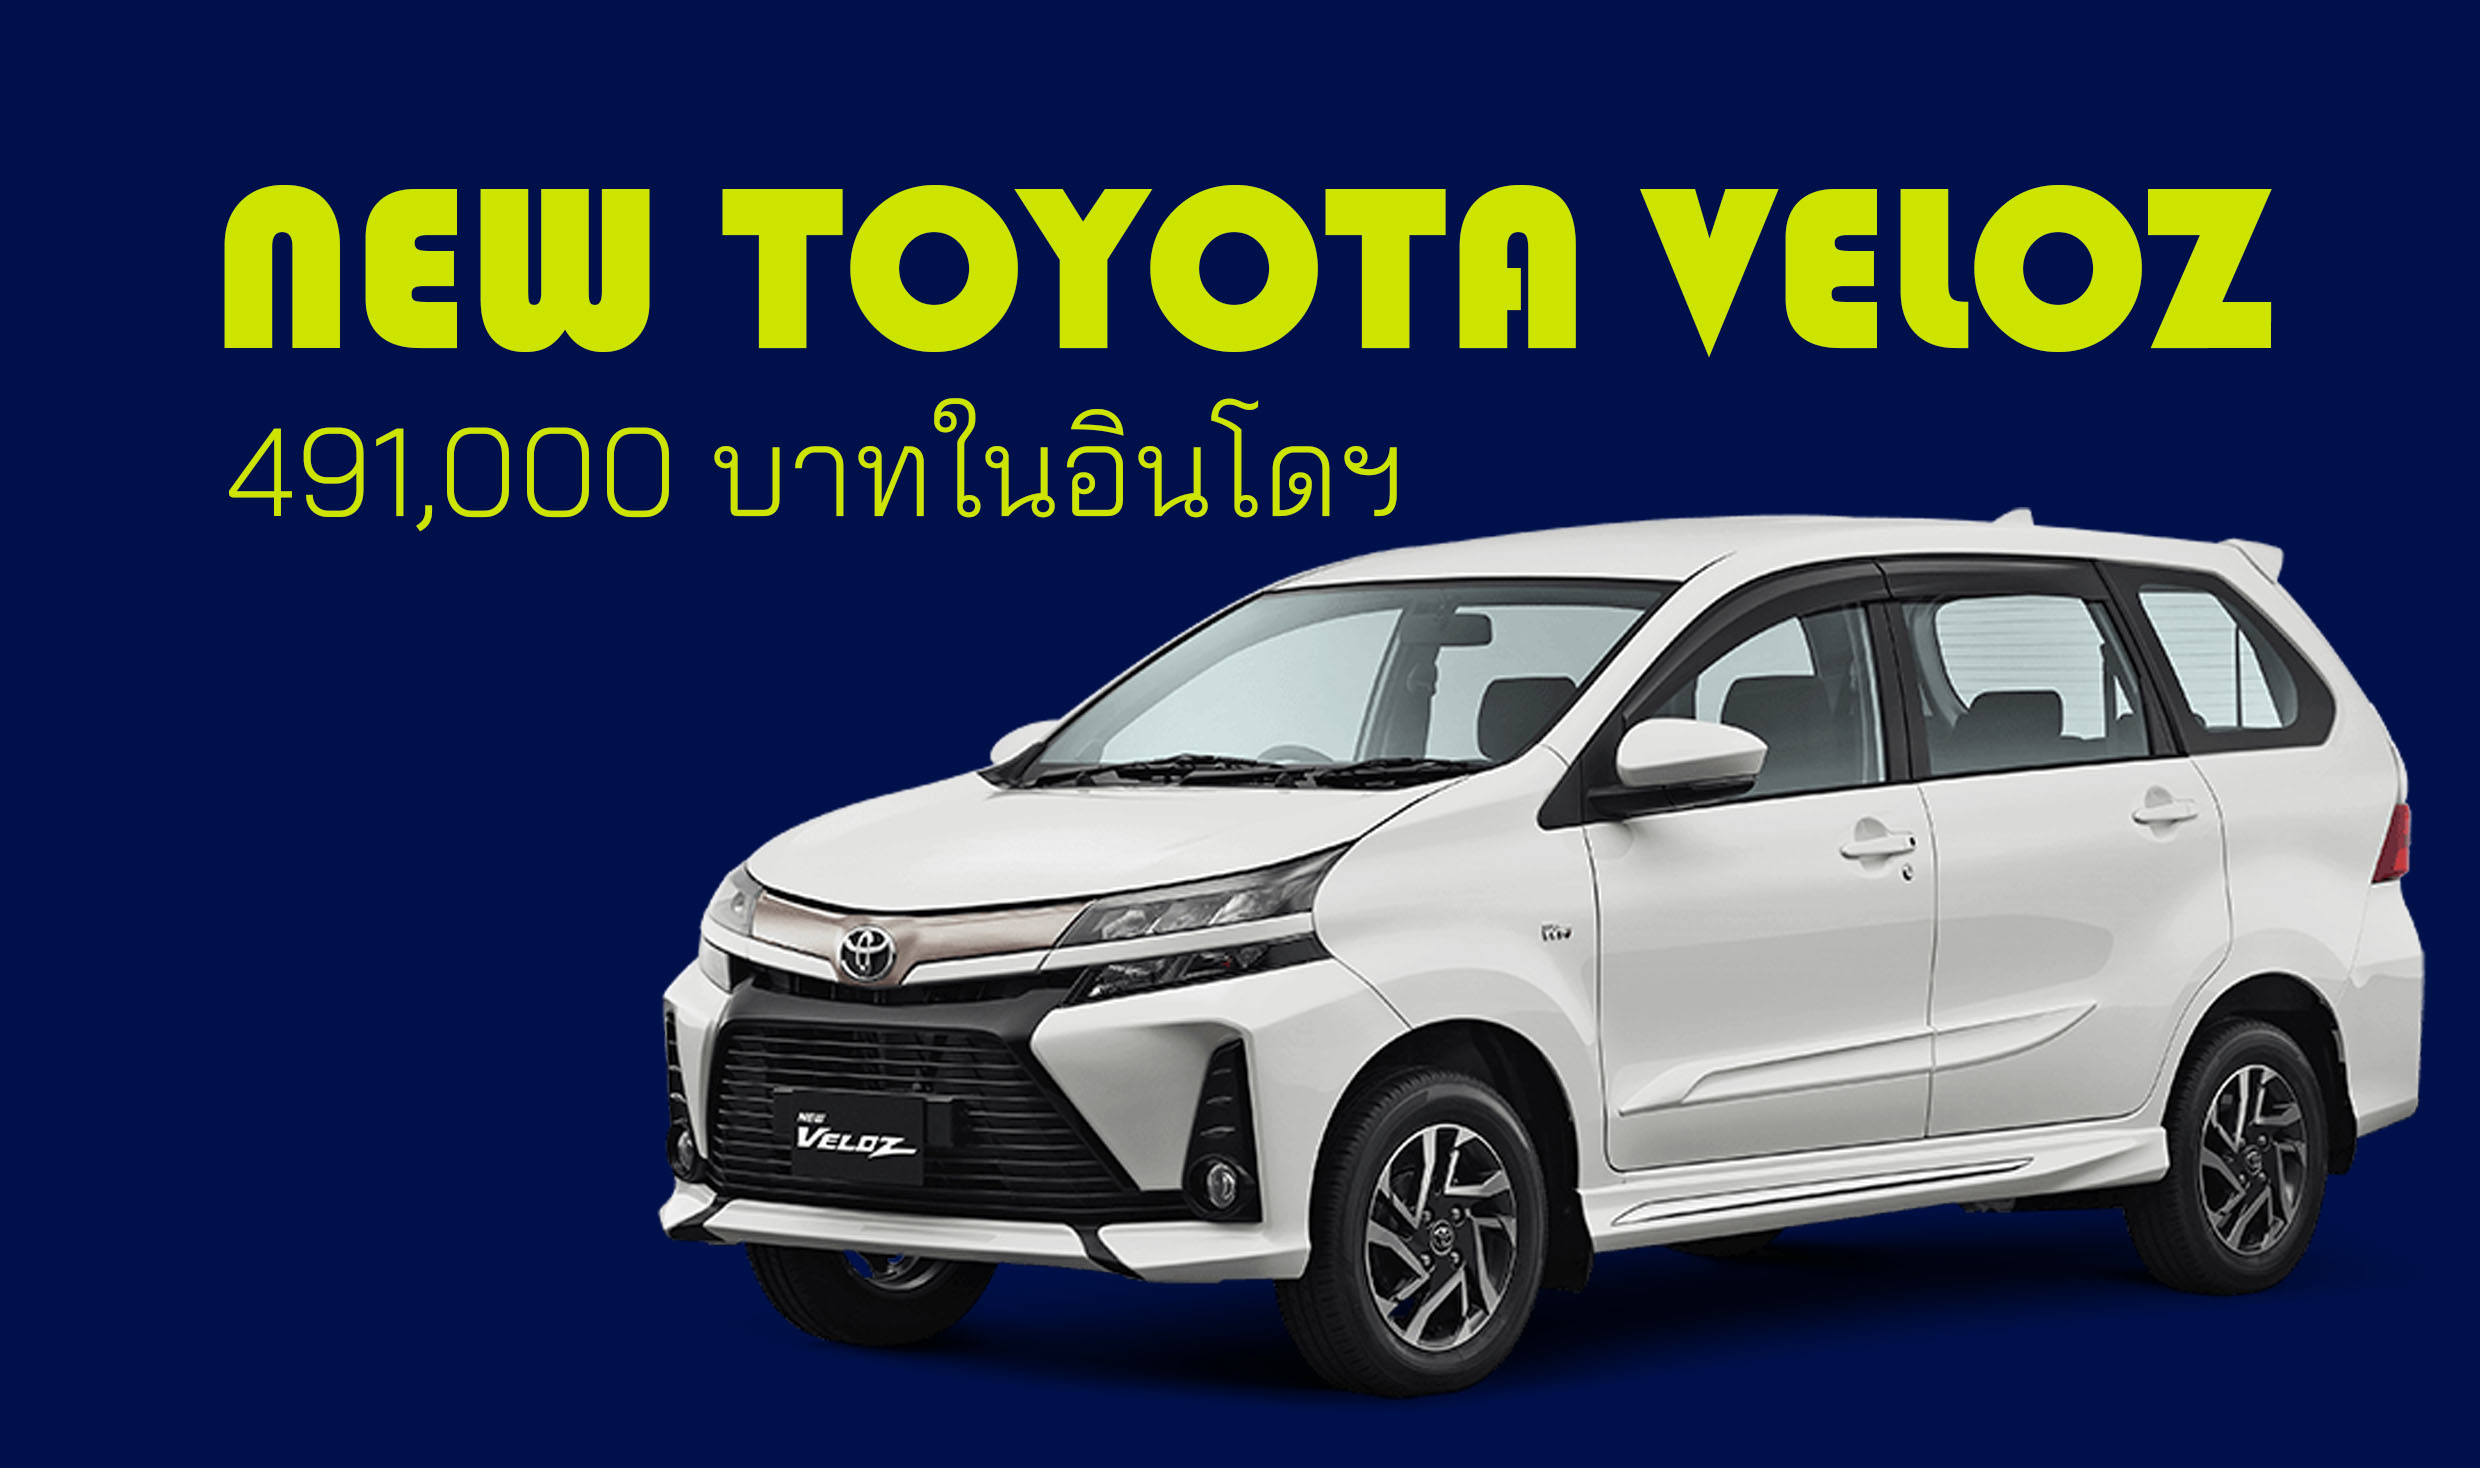 NEW Toyota VELOZ ราคา 491,000 บาทในอินโดฯ